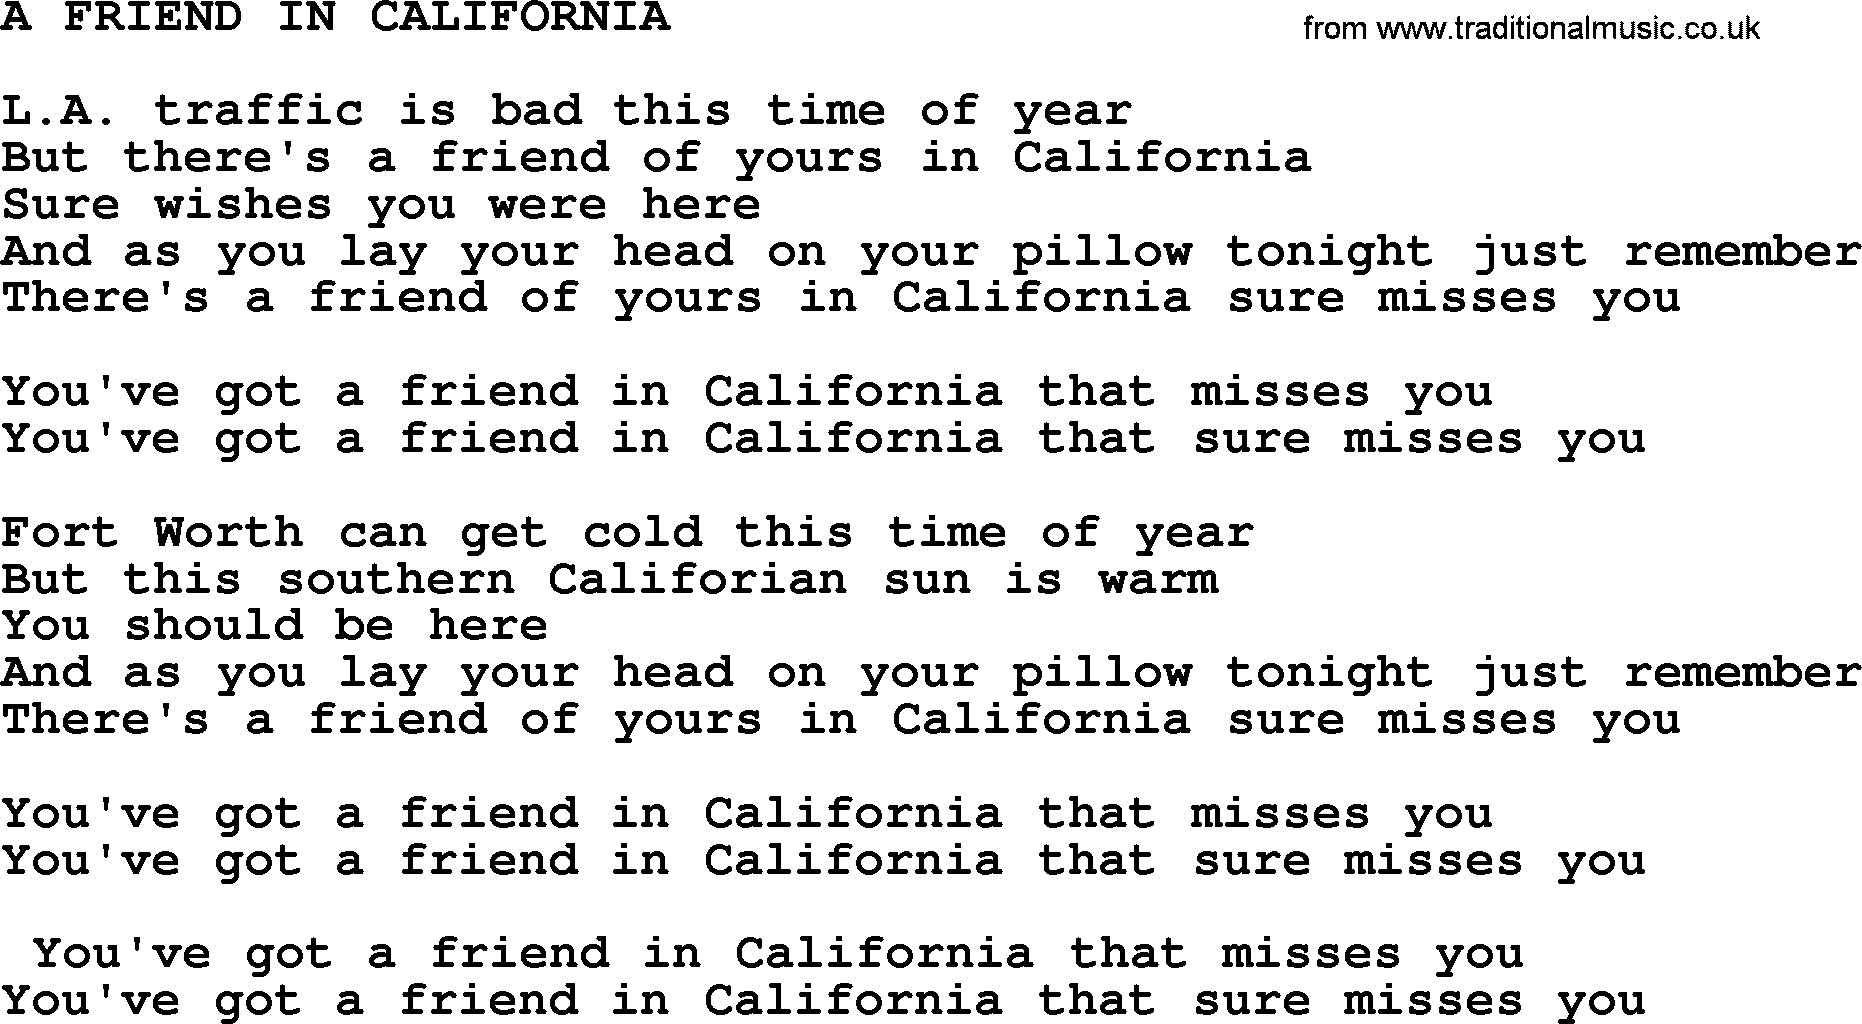 Merle Haggard song: A Friend In California, lyrics.